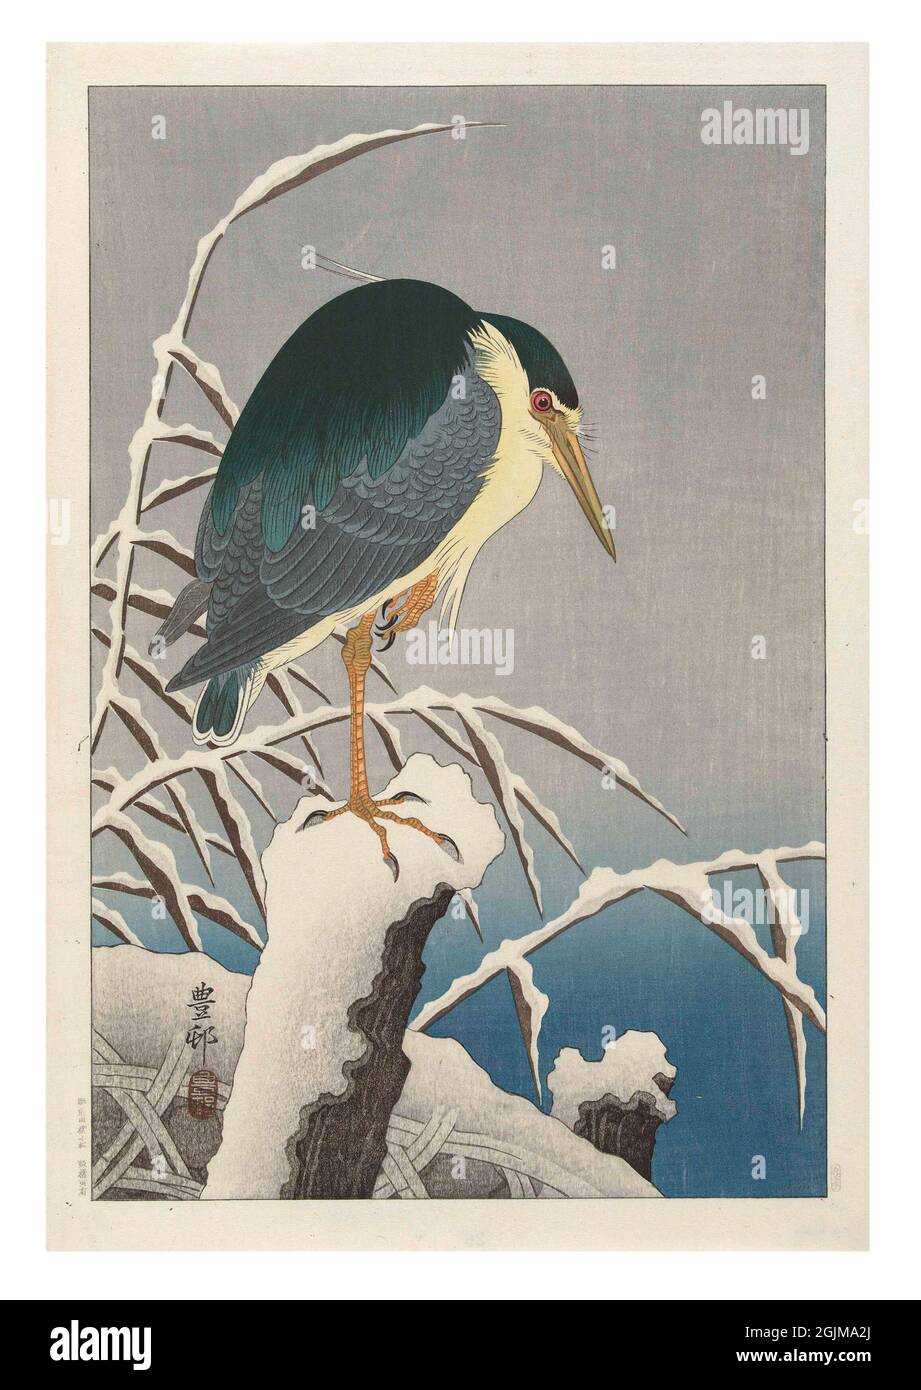 Heron standing on one leg on snowy pole. Snowy reeds in the background.  Digitally optimised nineteenth century Japanese woodcut illustration. Stock Photo